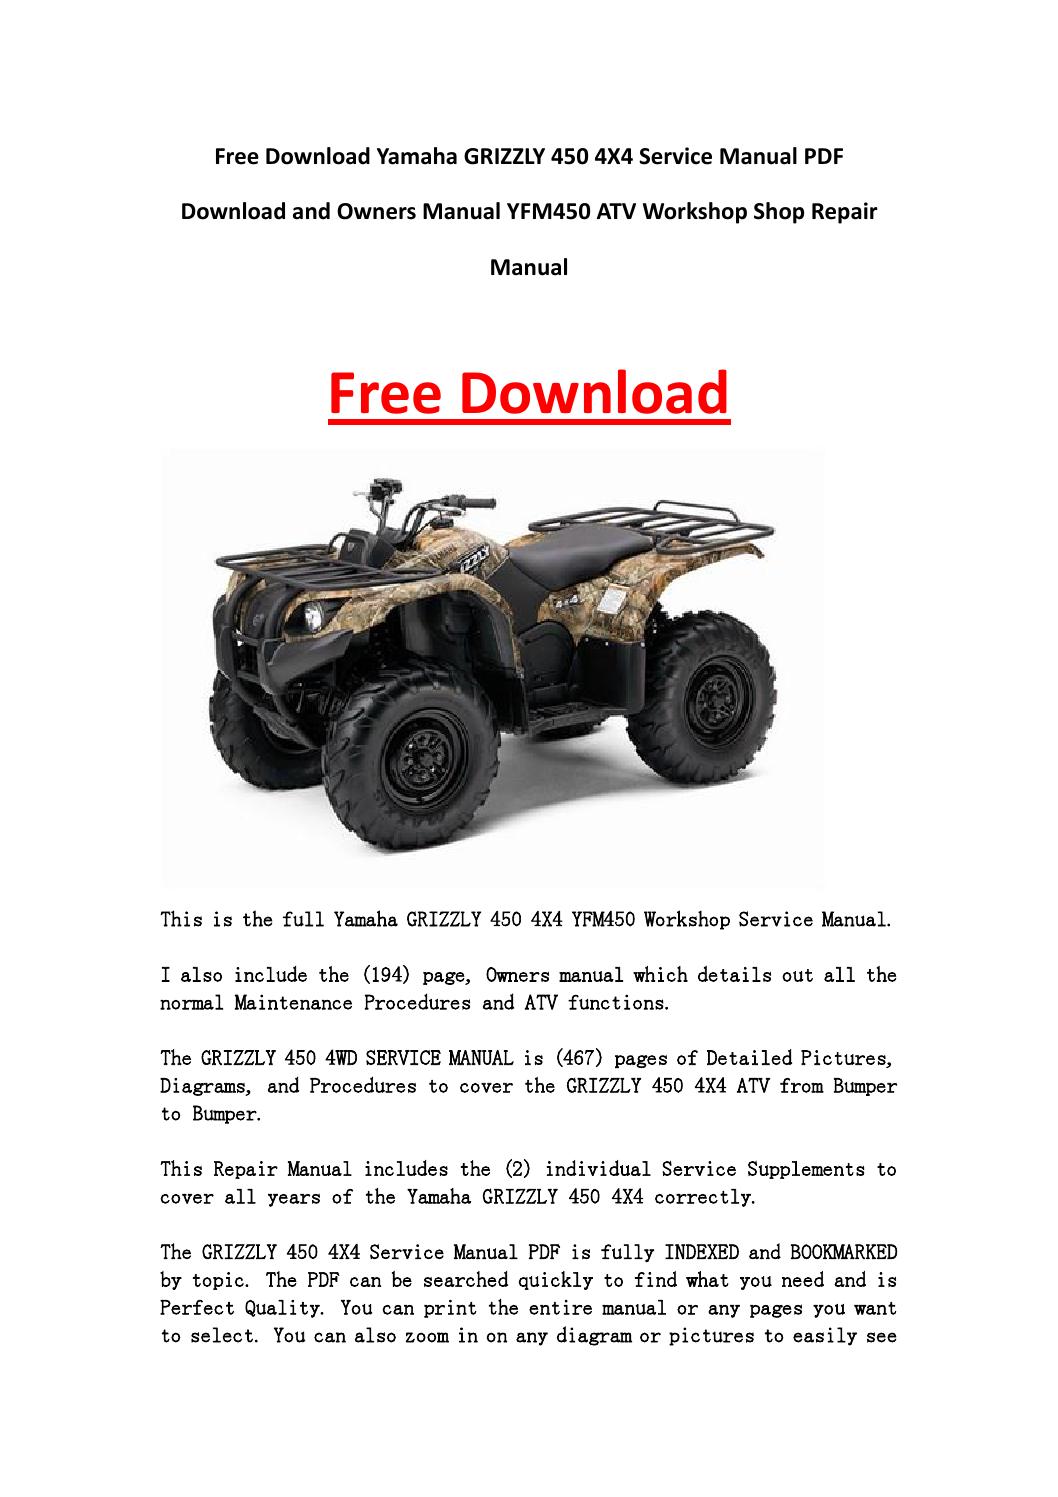 Suzuki atv service manual free download